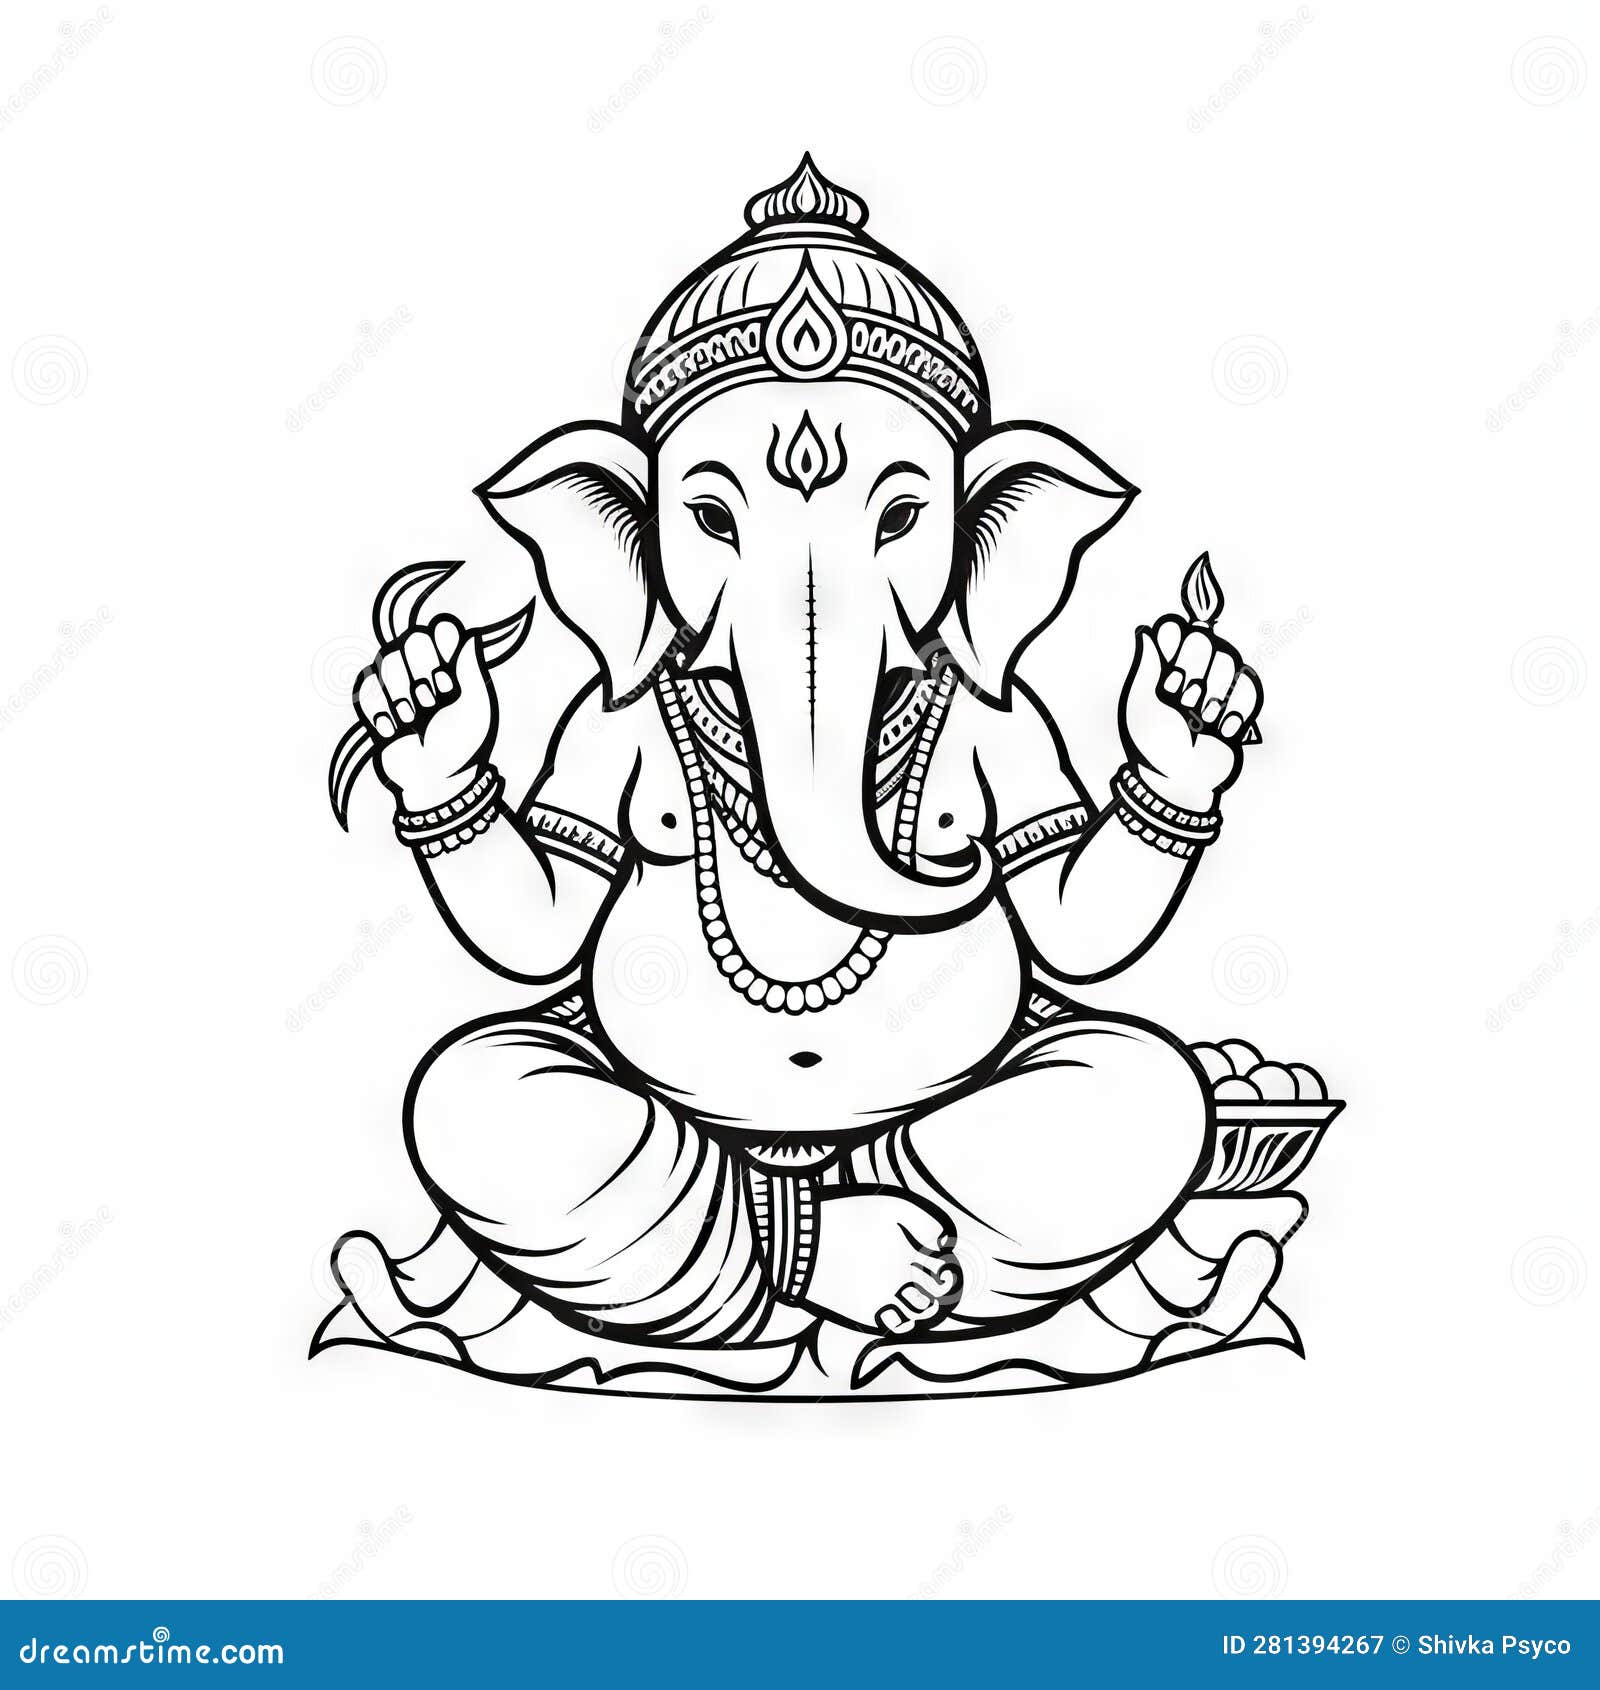 Easy Drawing of Ganesha /Ganesh chaturthi drawing for kids - YouTube